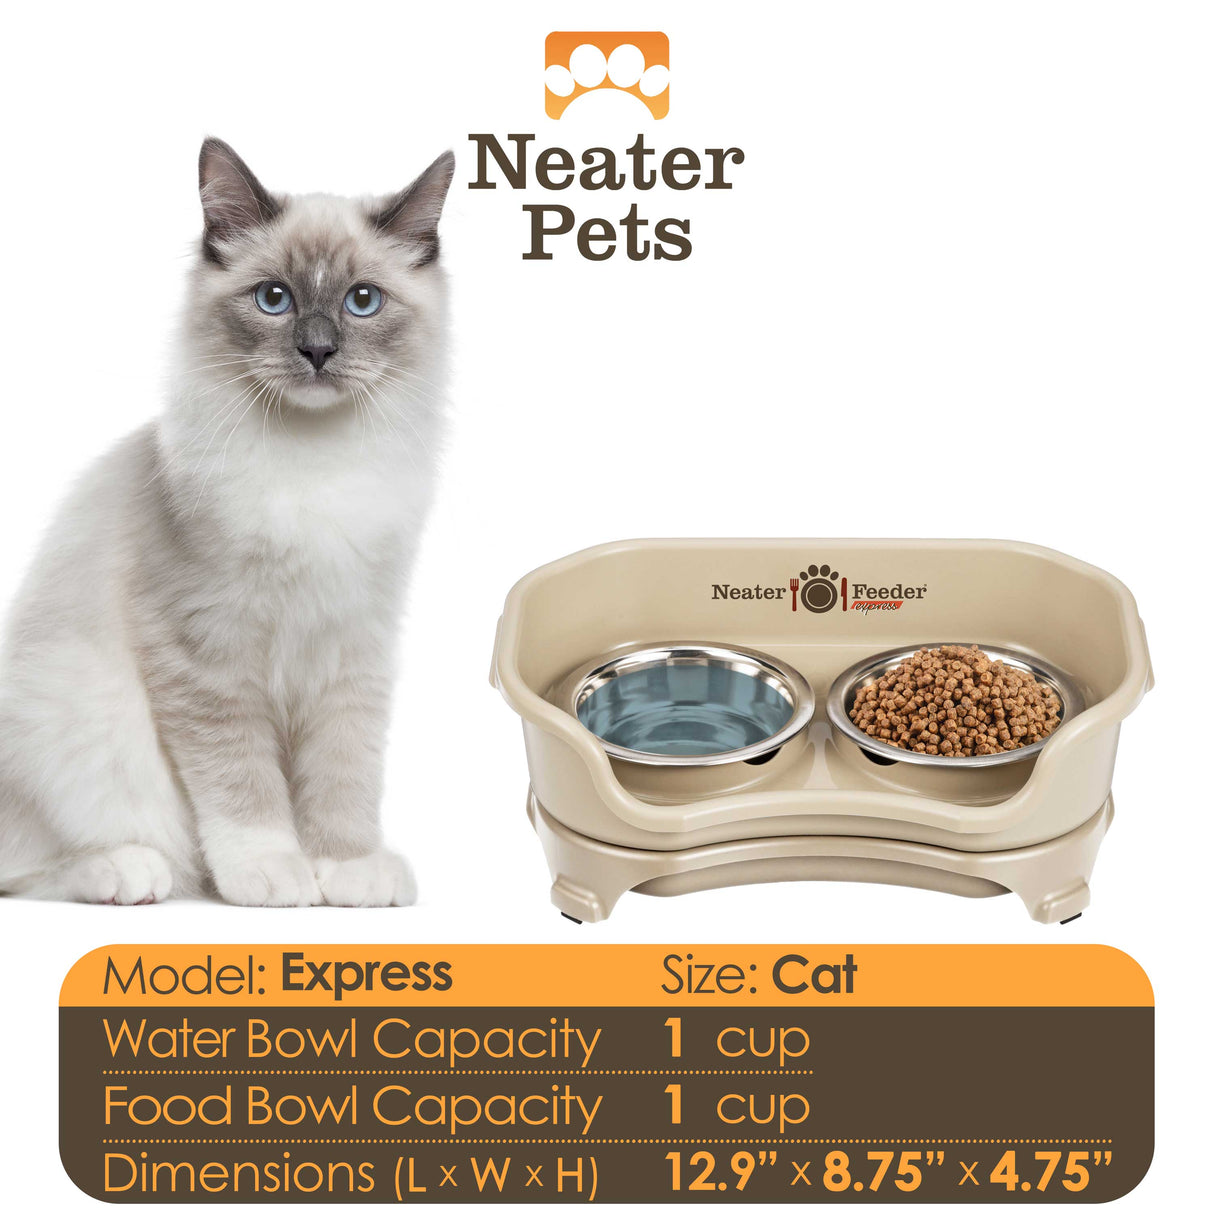 Express cat bowl capacity and dimensions